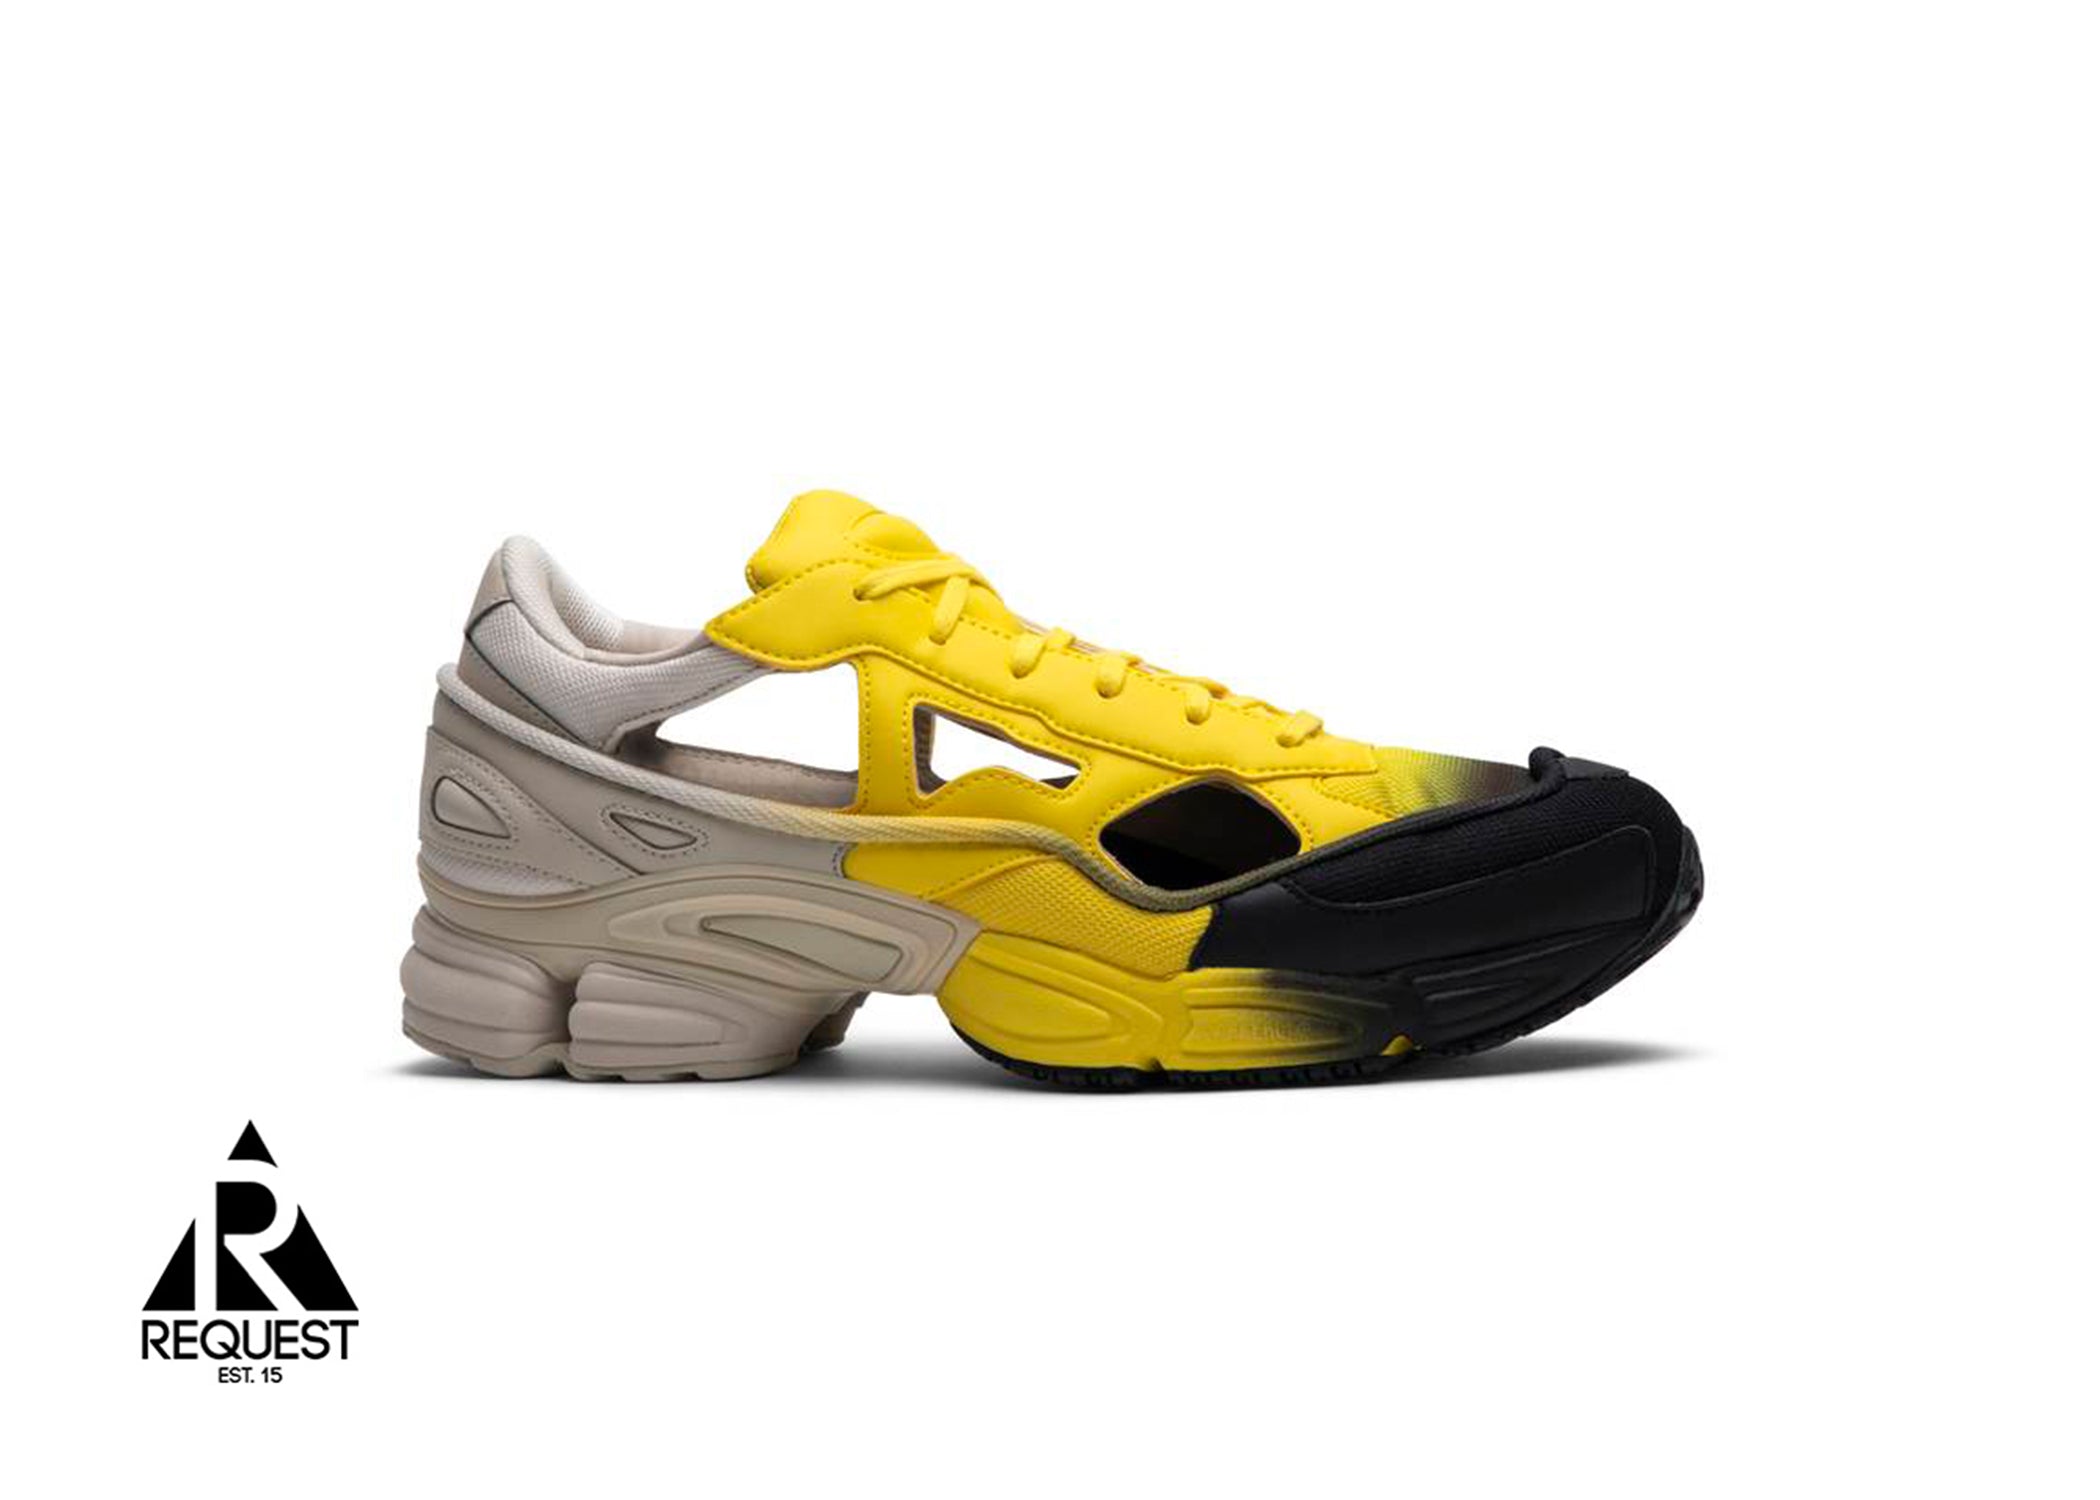 Adidas Replicant Oswego RAF Simons “Clear Brown Yellow”